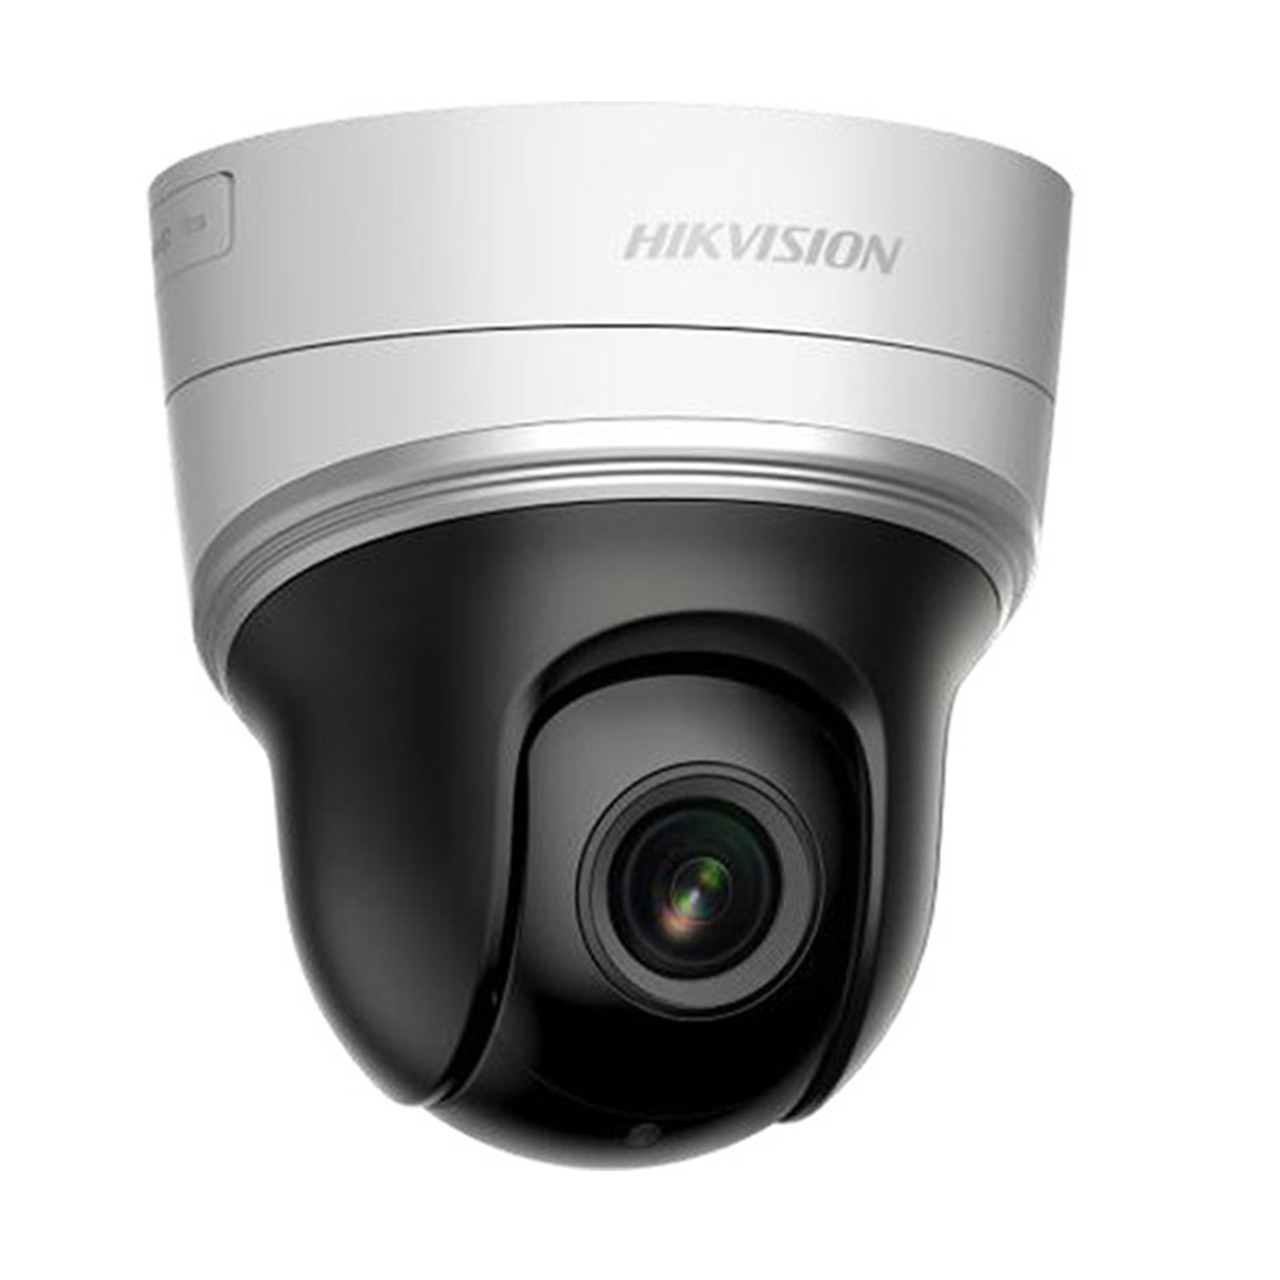 Devour Splendor Above head and shoulder Hikvision DS-2DE2202I-DE3/W Indoor PTZ IP Camera